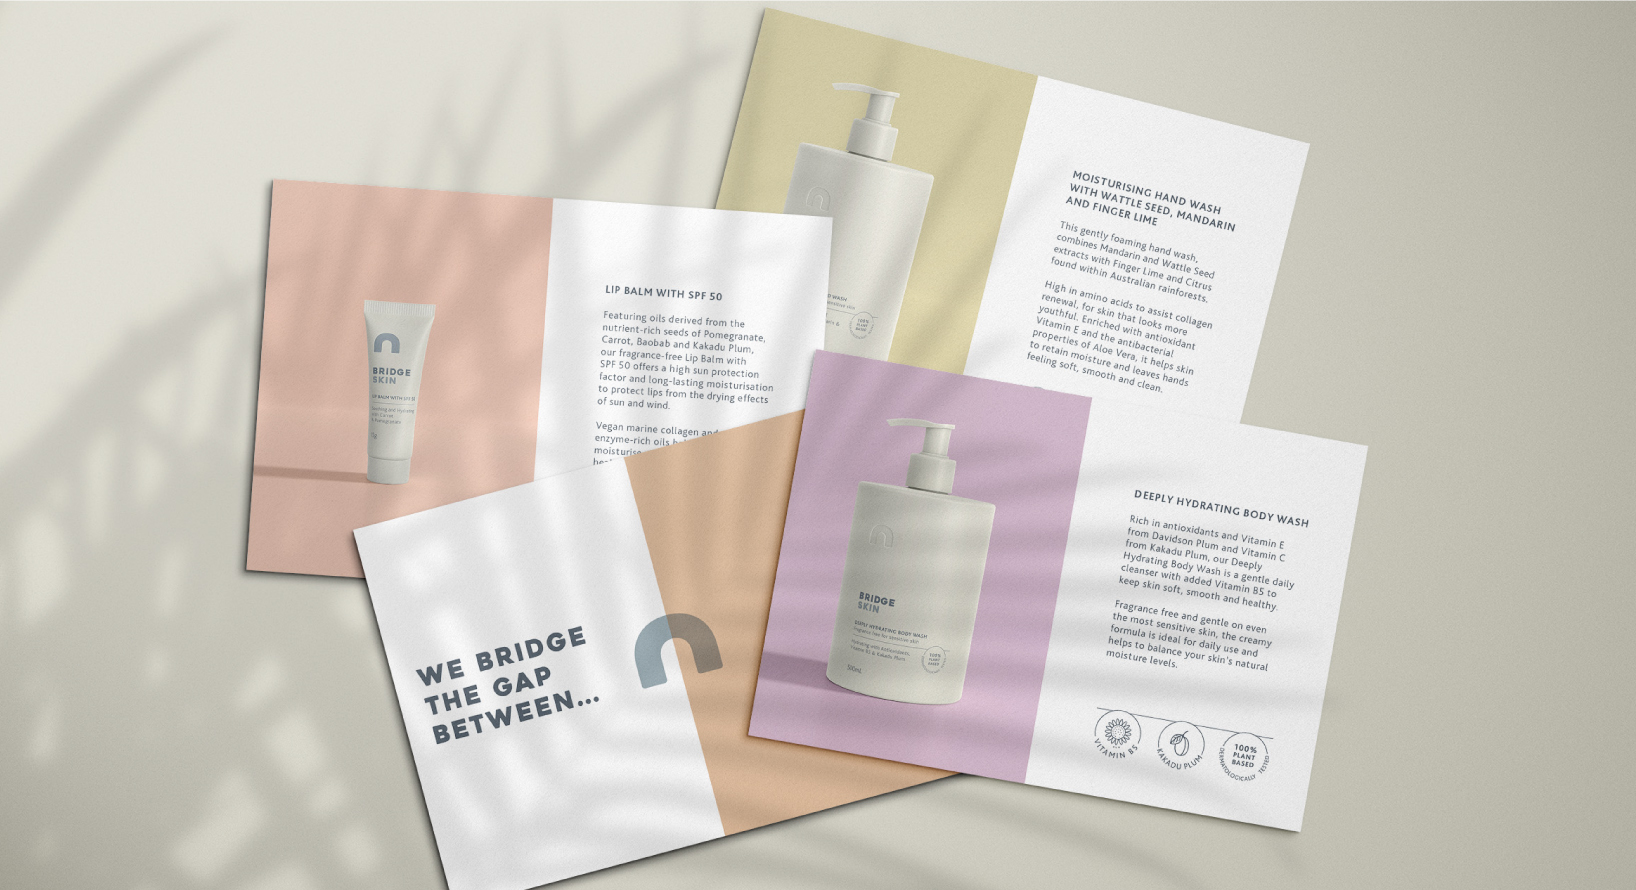 Bridge Skin postcards showcasing the product range and key benefits